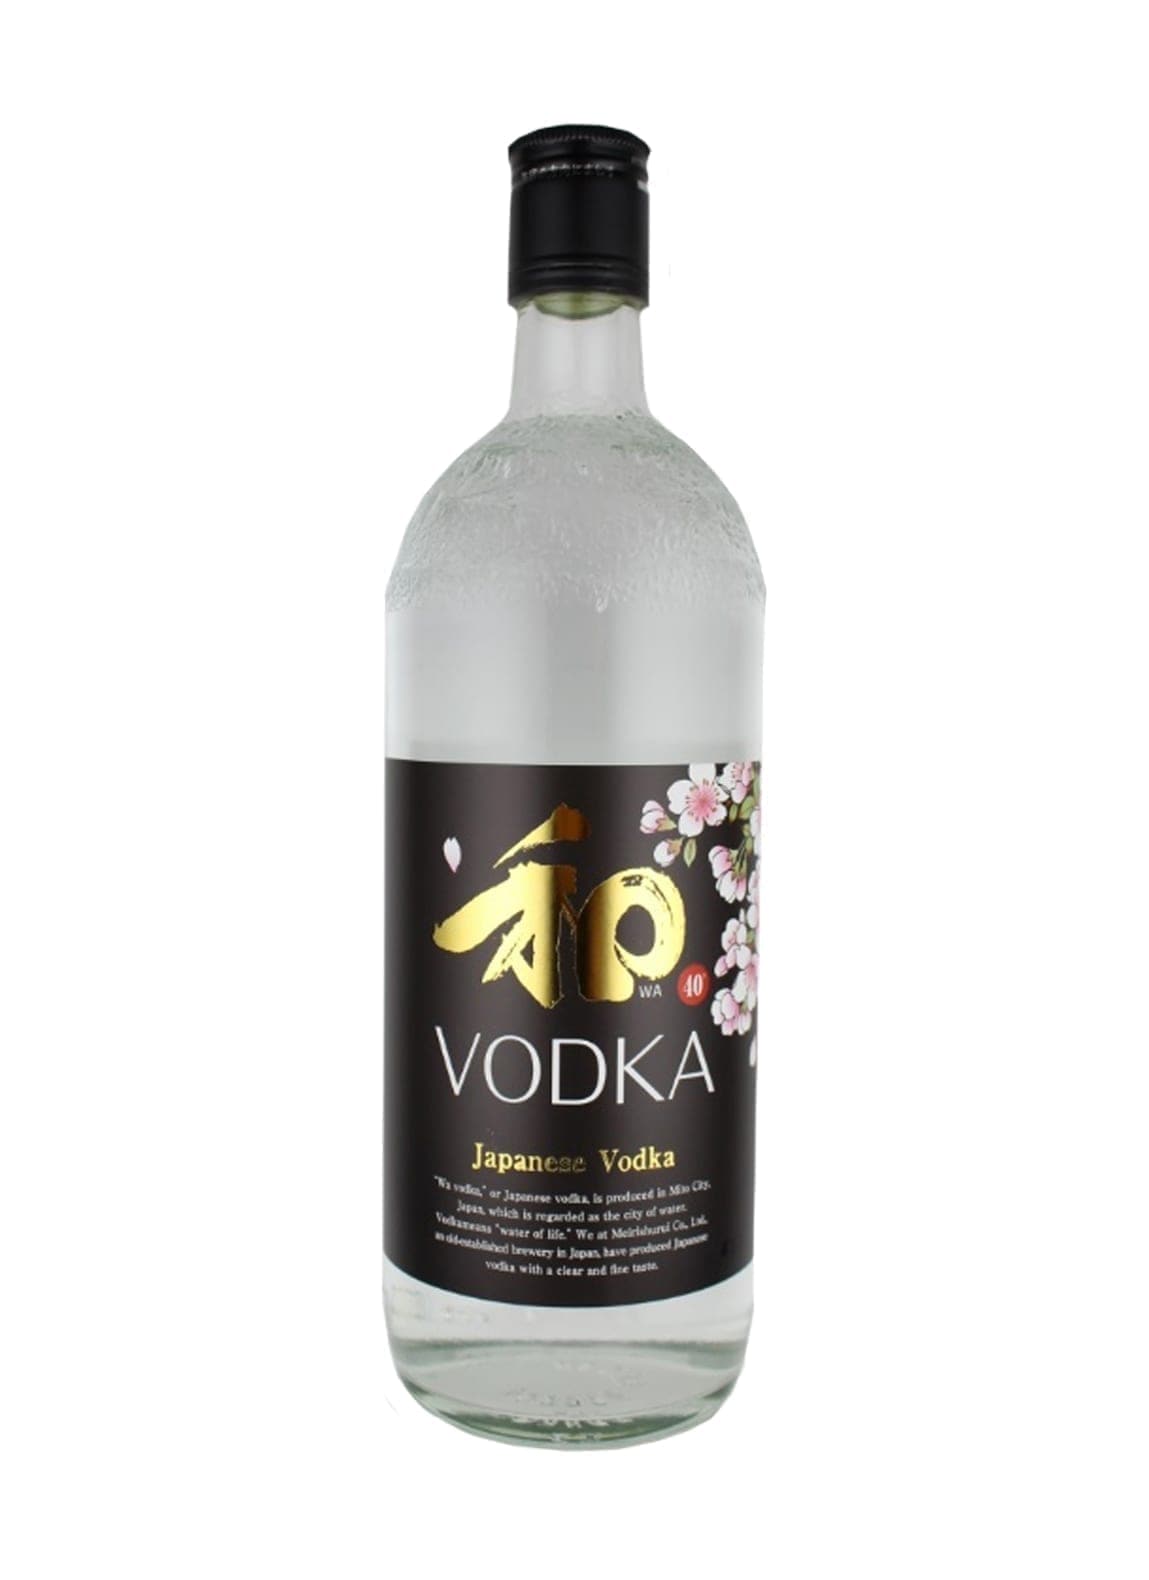 Wa Premium Craft Vodka 40% 750ml | Vodka | Shop online at Spirits of France